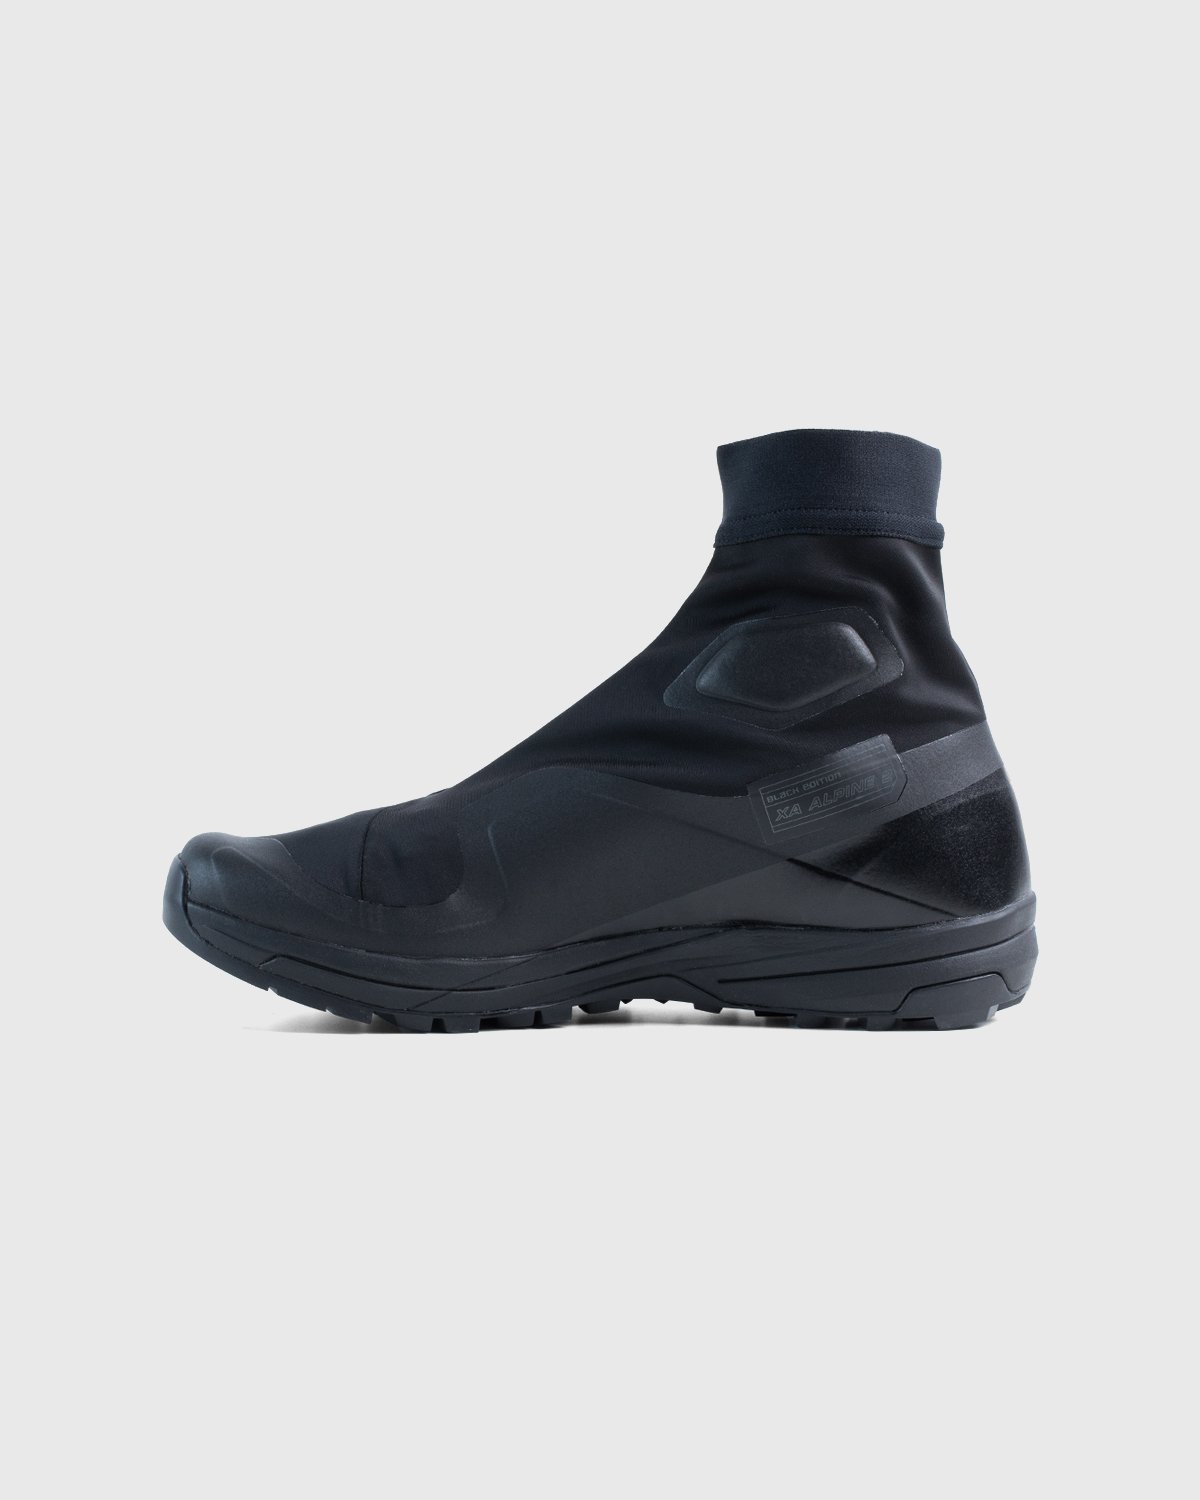 Salomon - S/Lab XA-Alpine 2 Limited Edition Black - Footwear - Black - Image 6